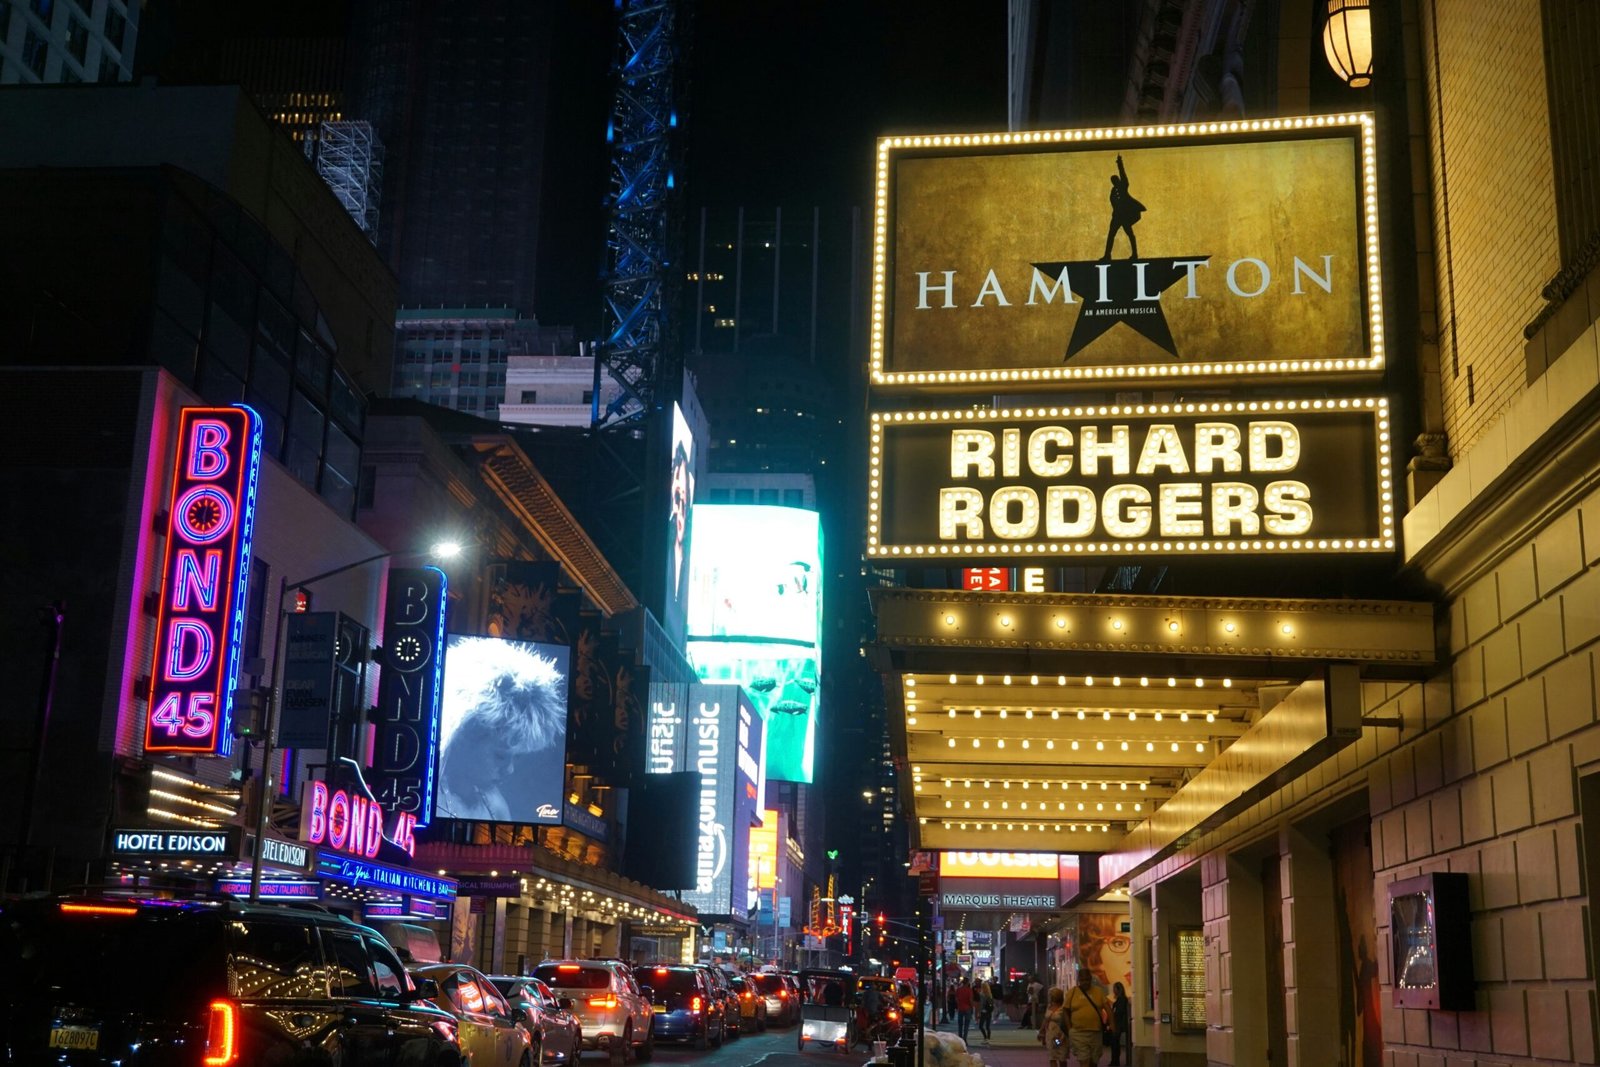 Broadway history